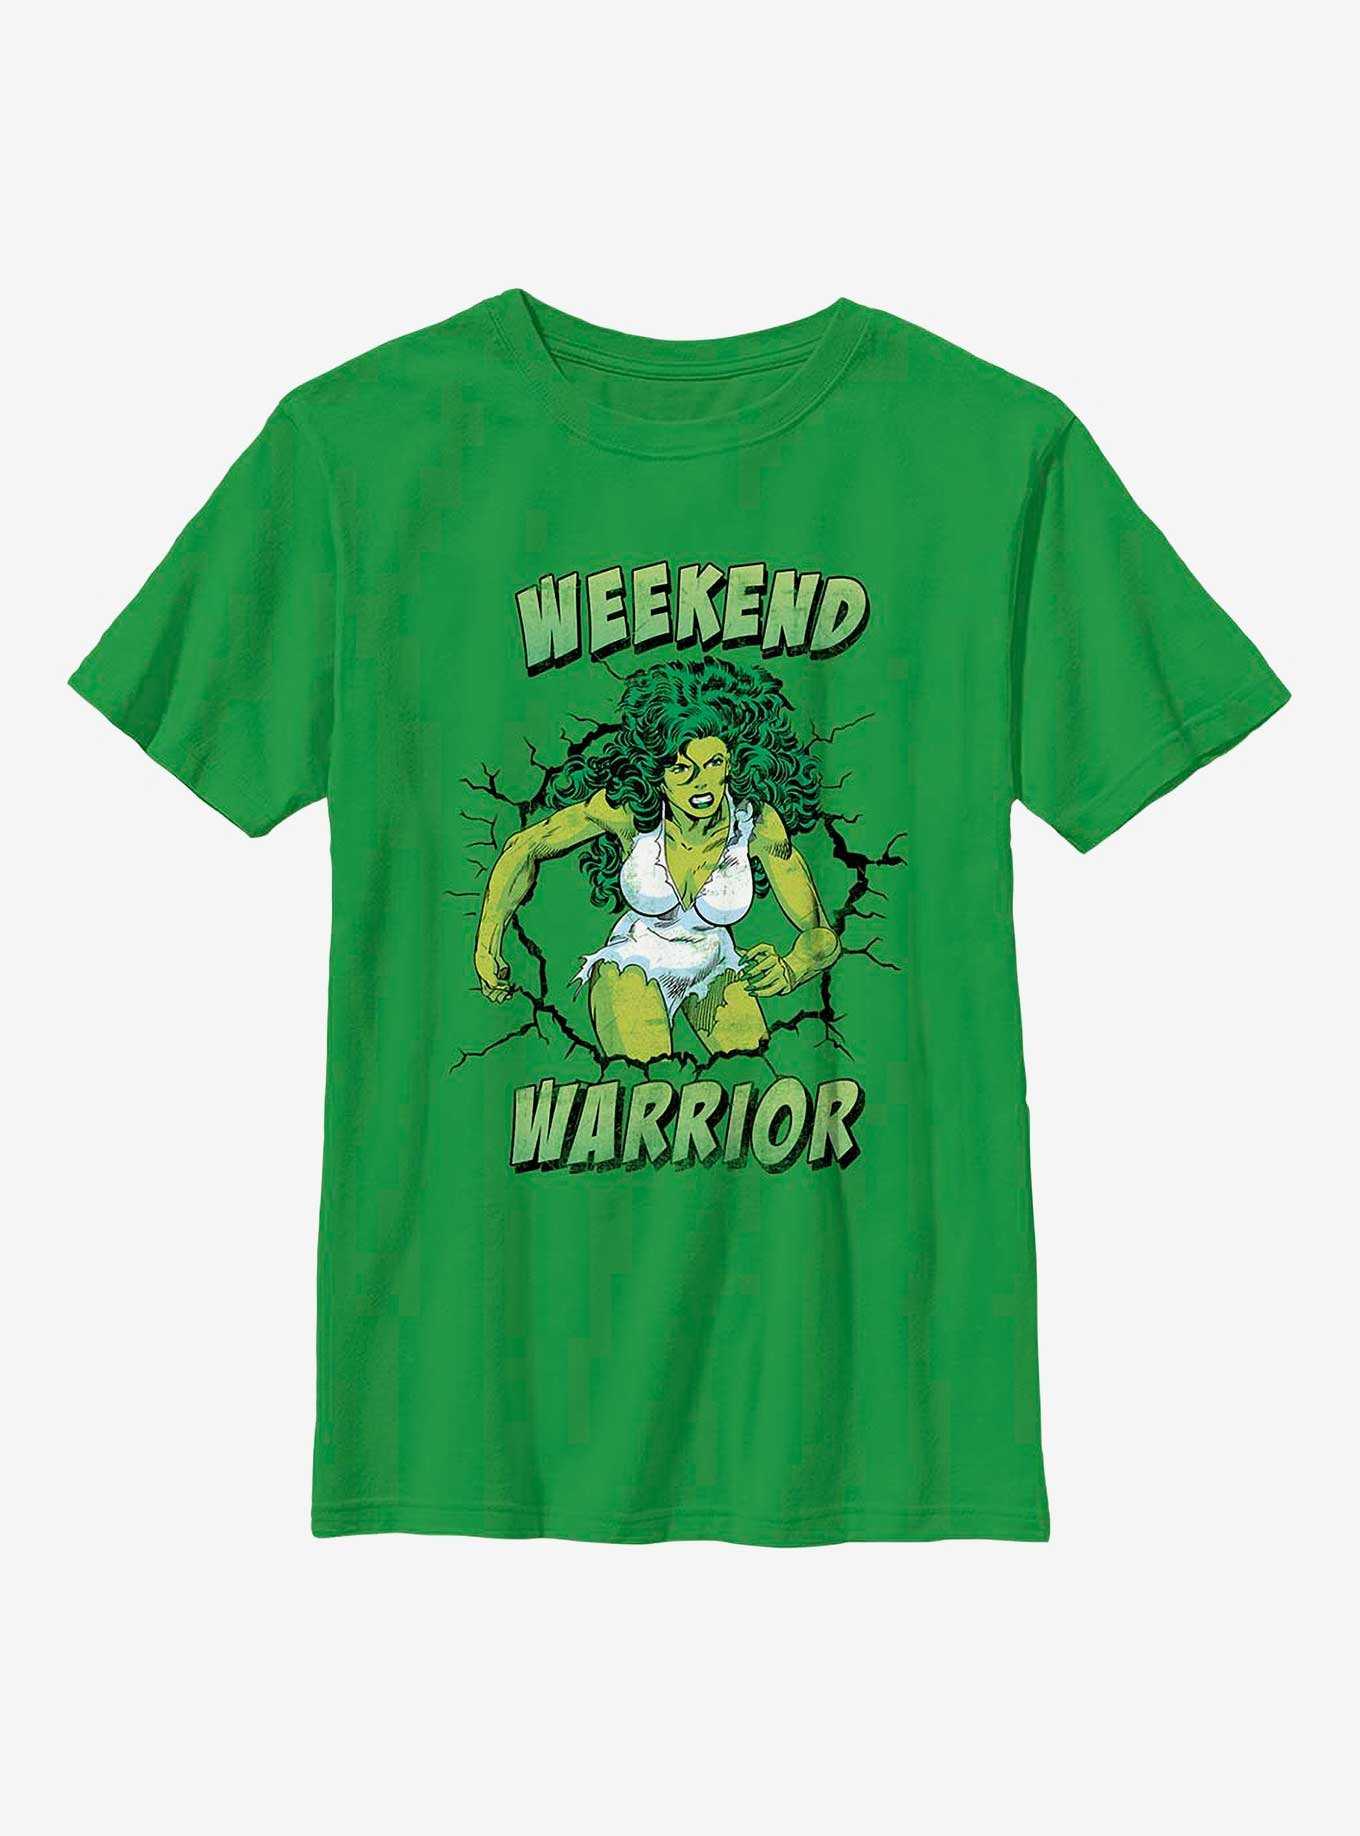 Marvel She-Hulk Weekend Warrior Youth T-Shirt, , hi-res